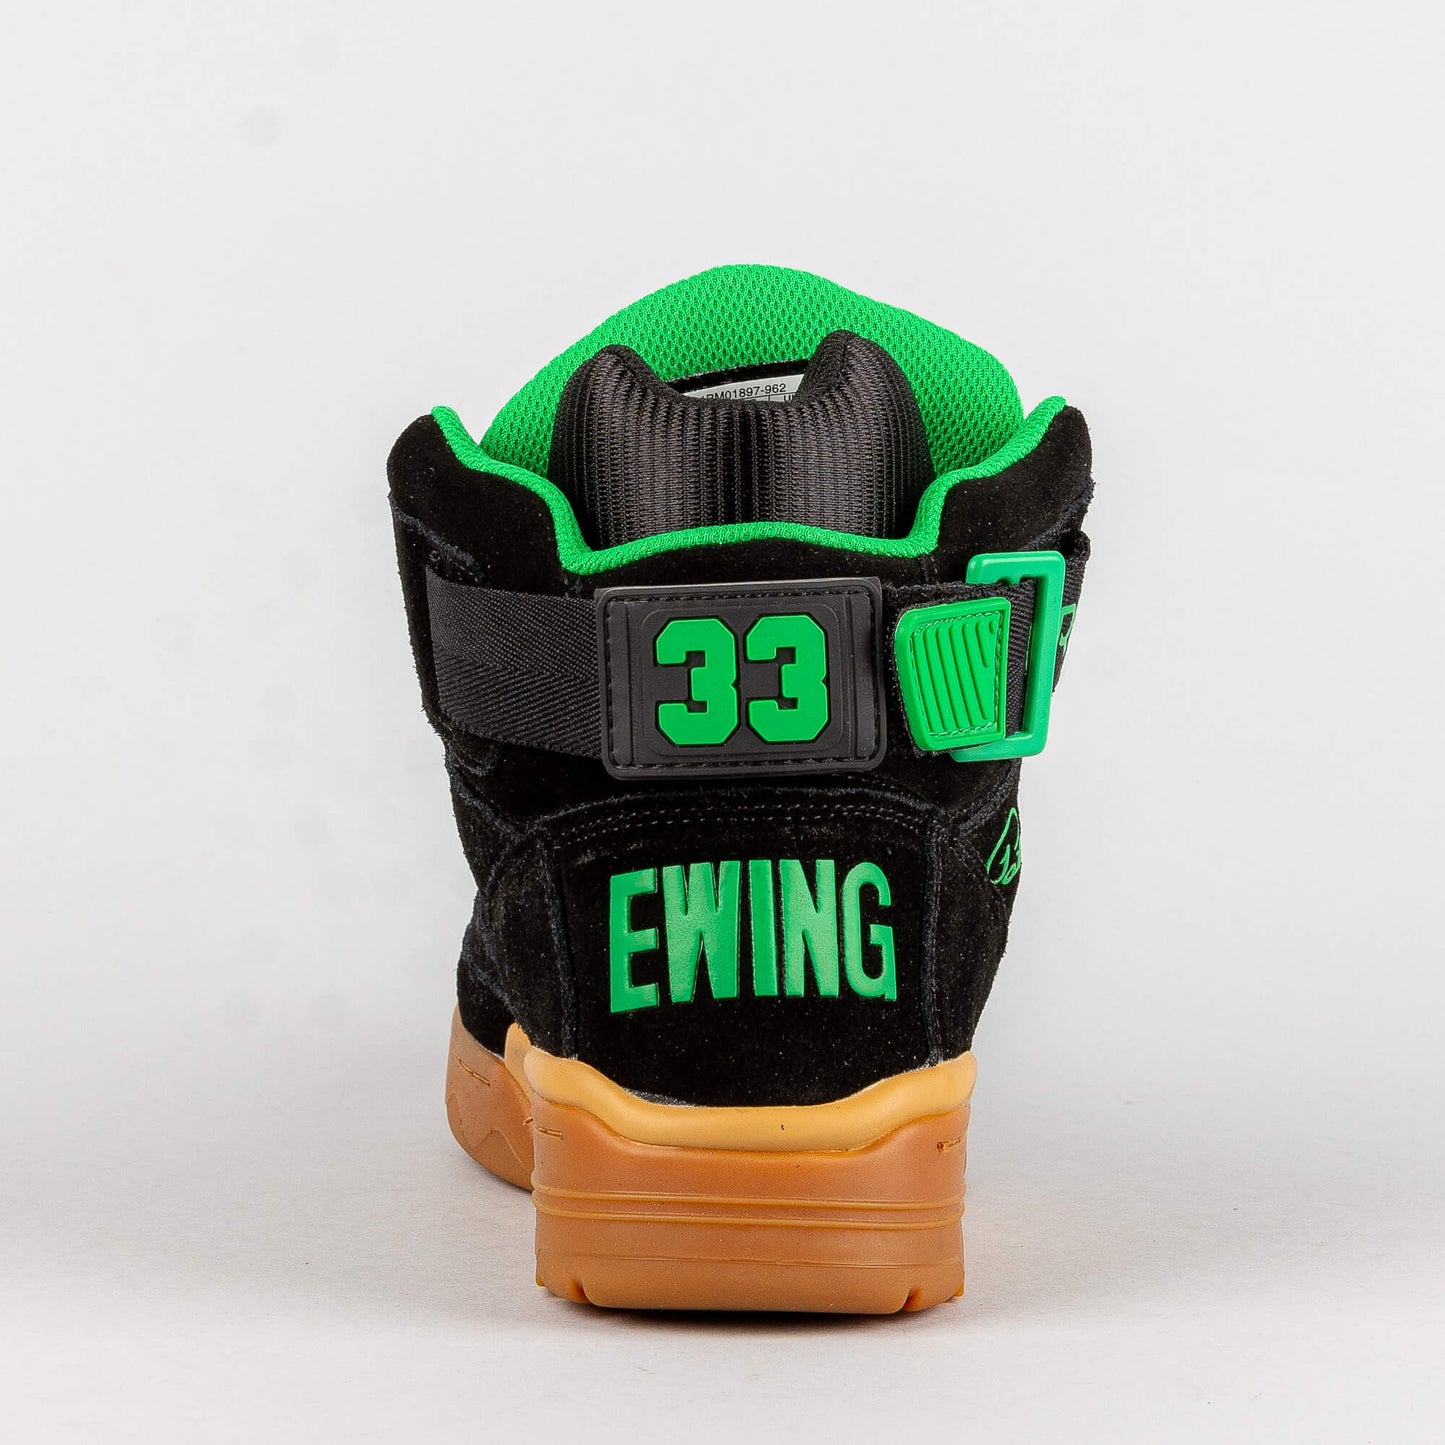 Ewing 33 Hi X Lrg Suede Black/Green/Gum